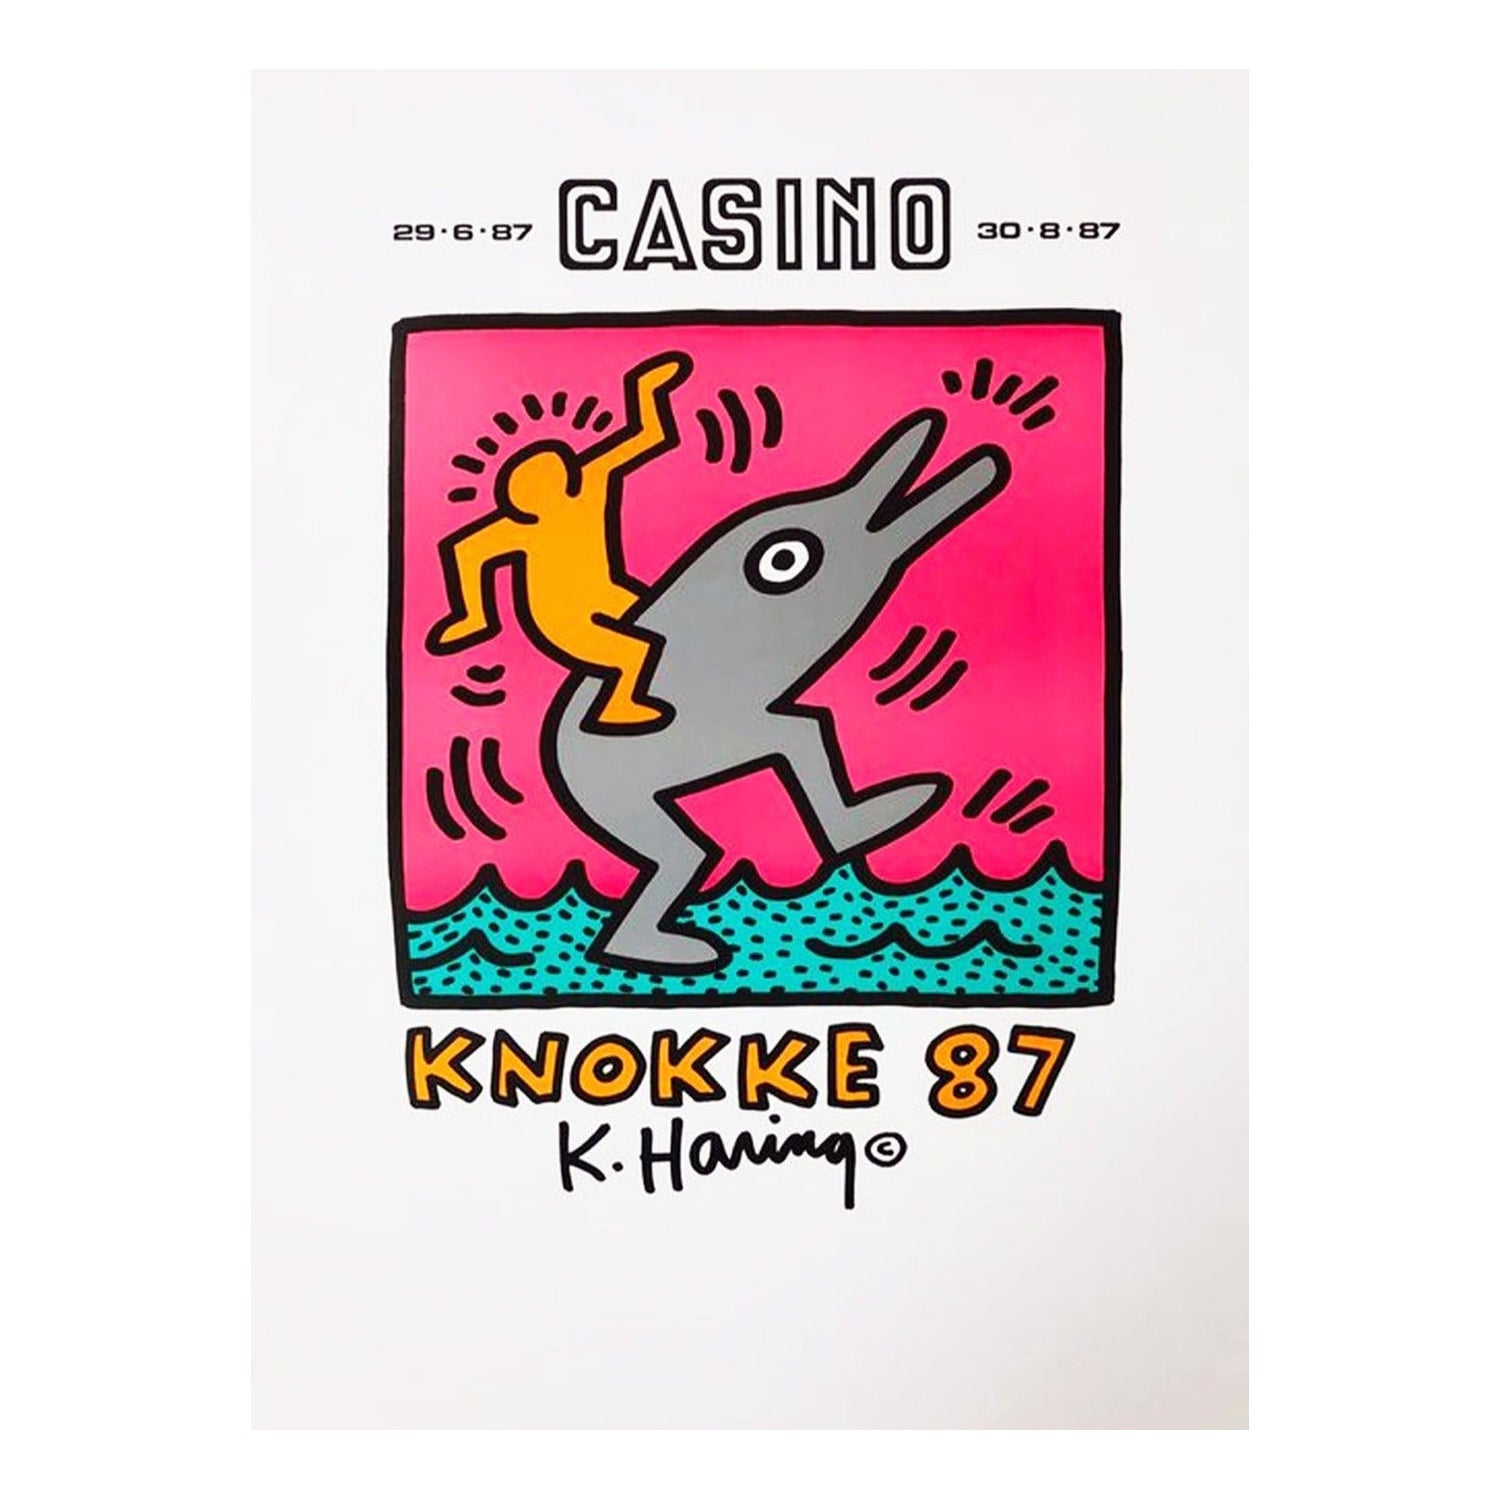 1987 Keith Haring, Casino Knokke Original Vintage Poster For Sale